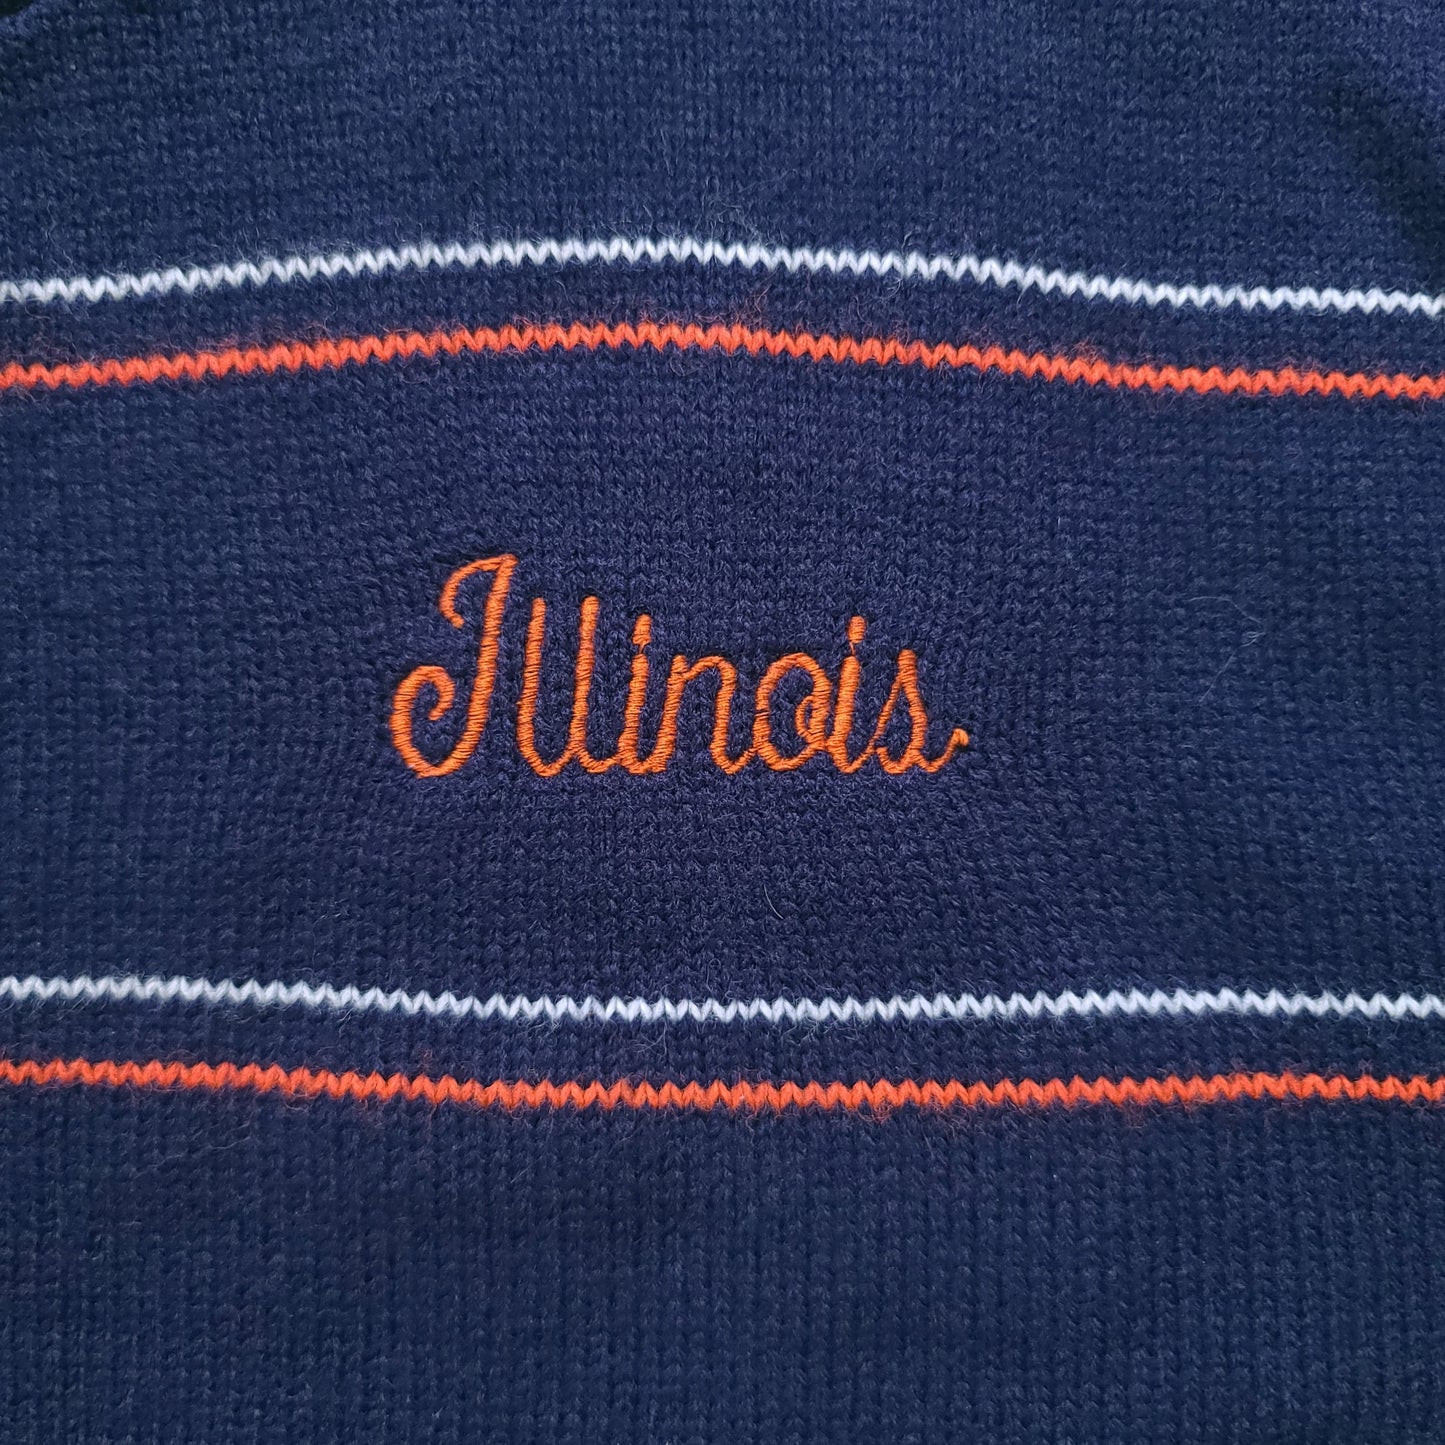 University Of Illinois Striped Knit Sweater